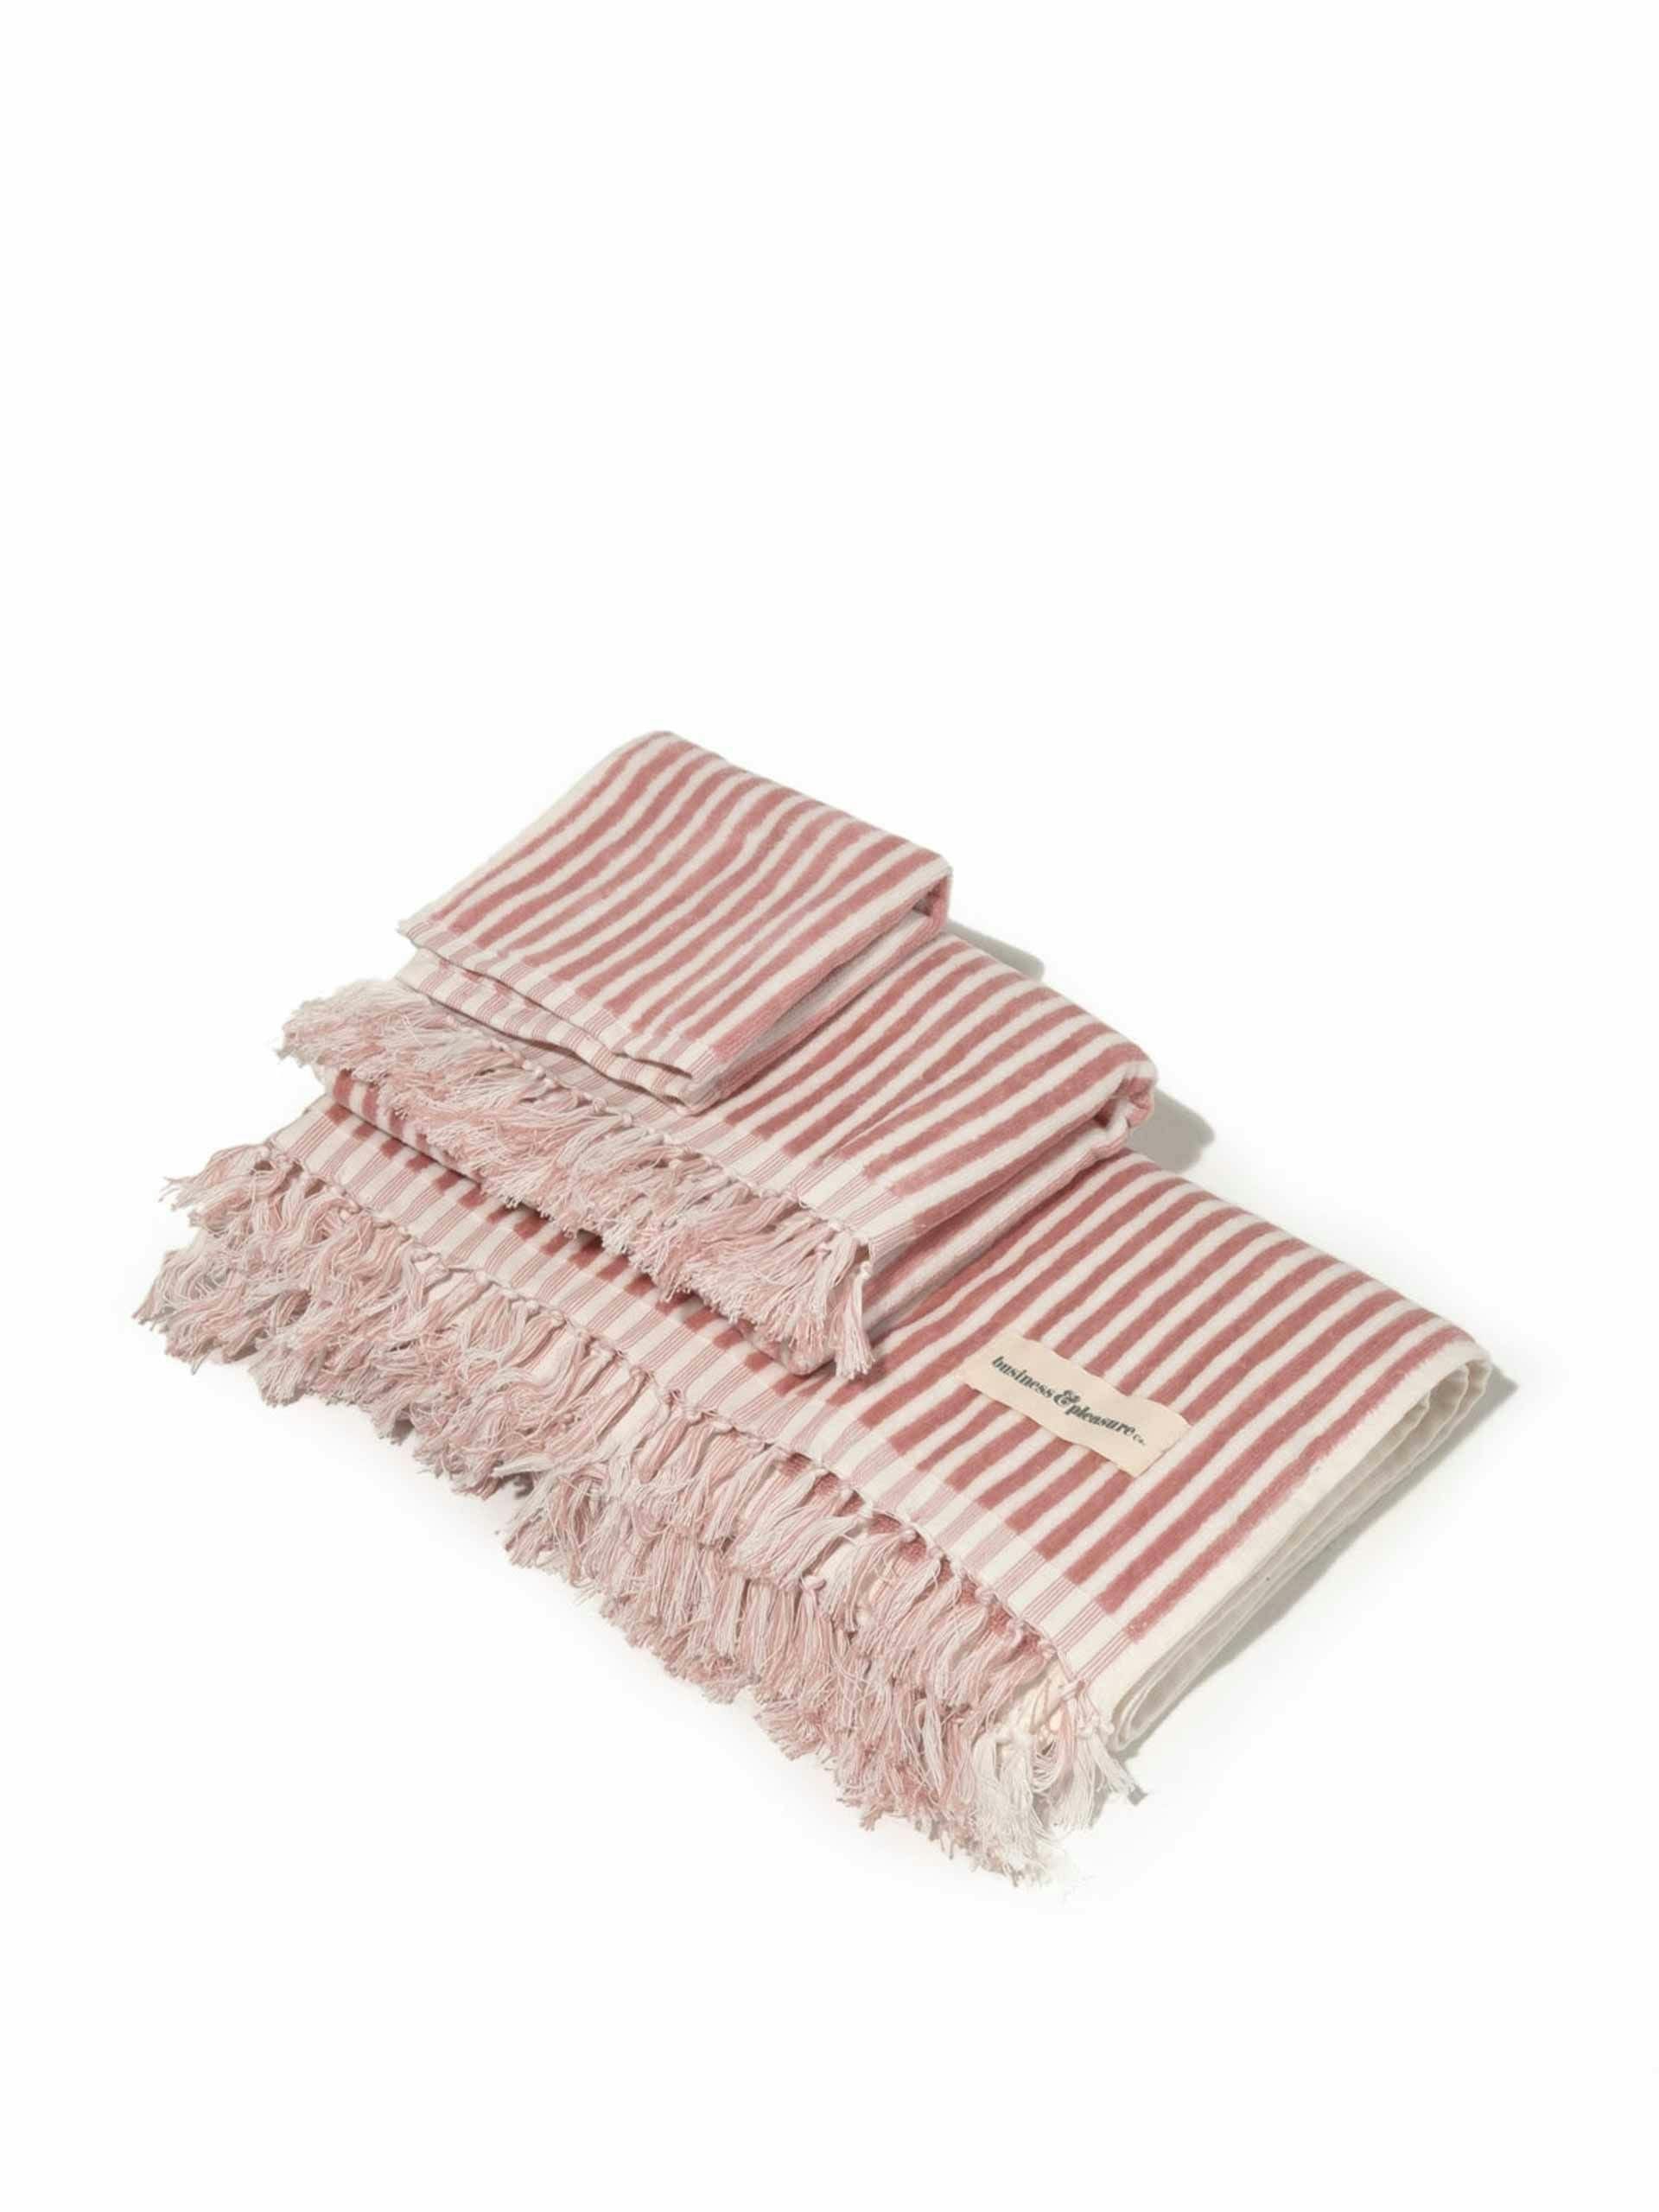 Pink and white striped bath set